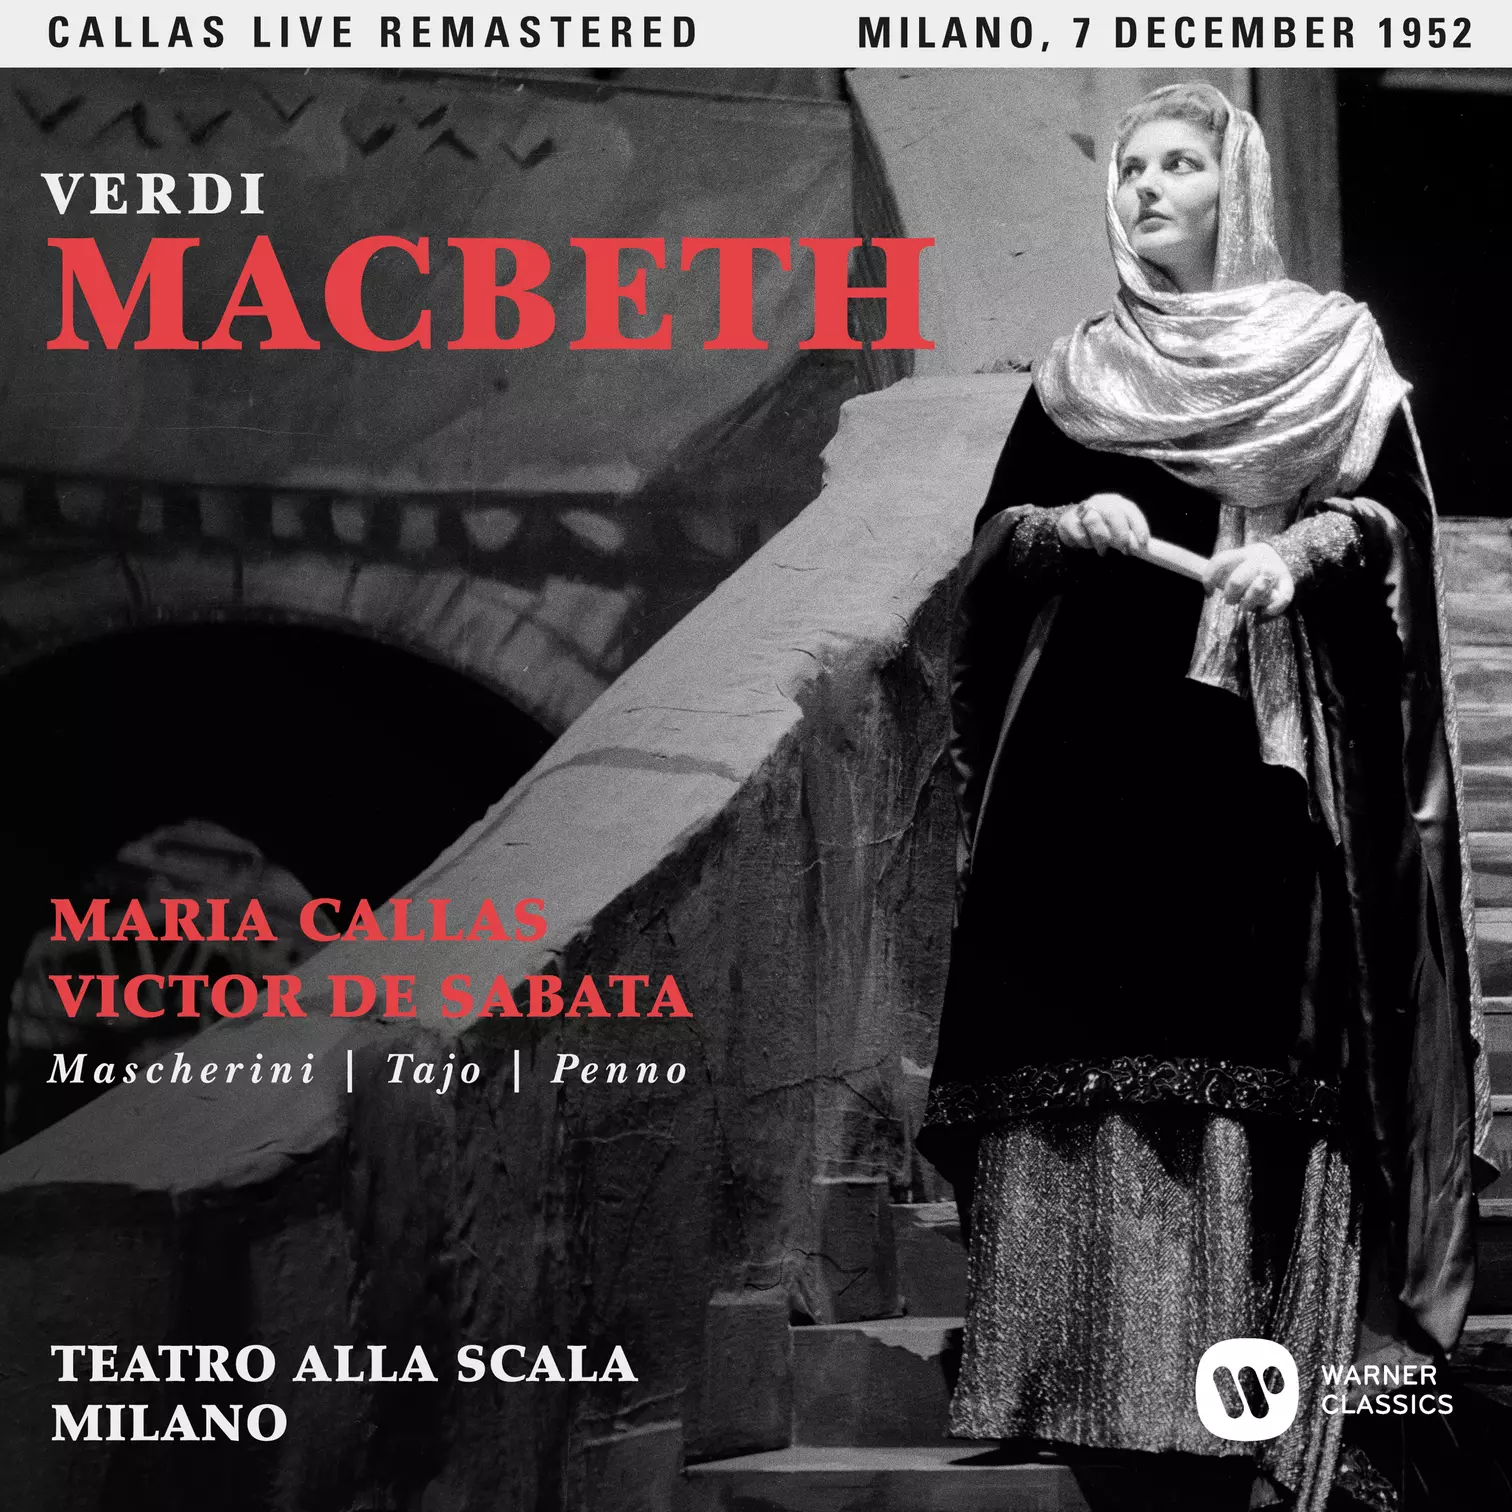 Verdi: Macbeth (1952 - Milan) - Callas Live Remastered